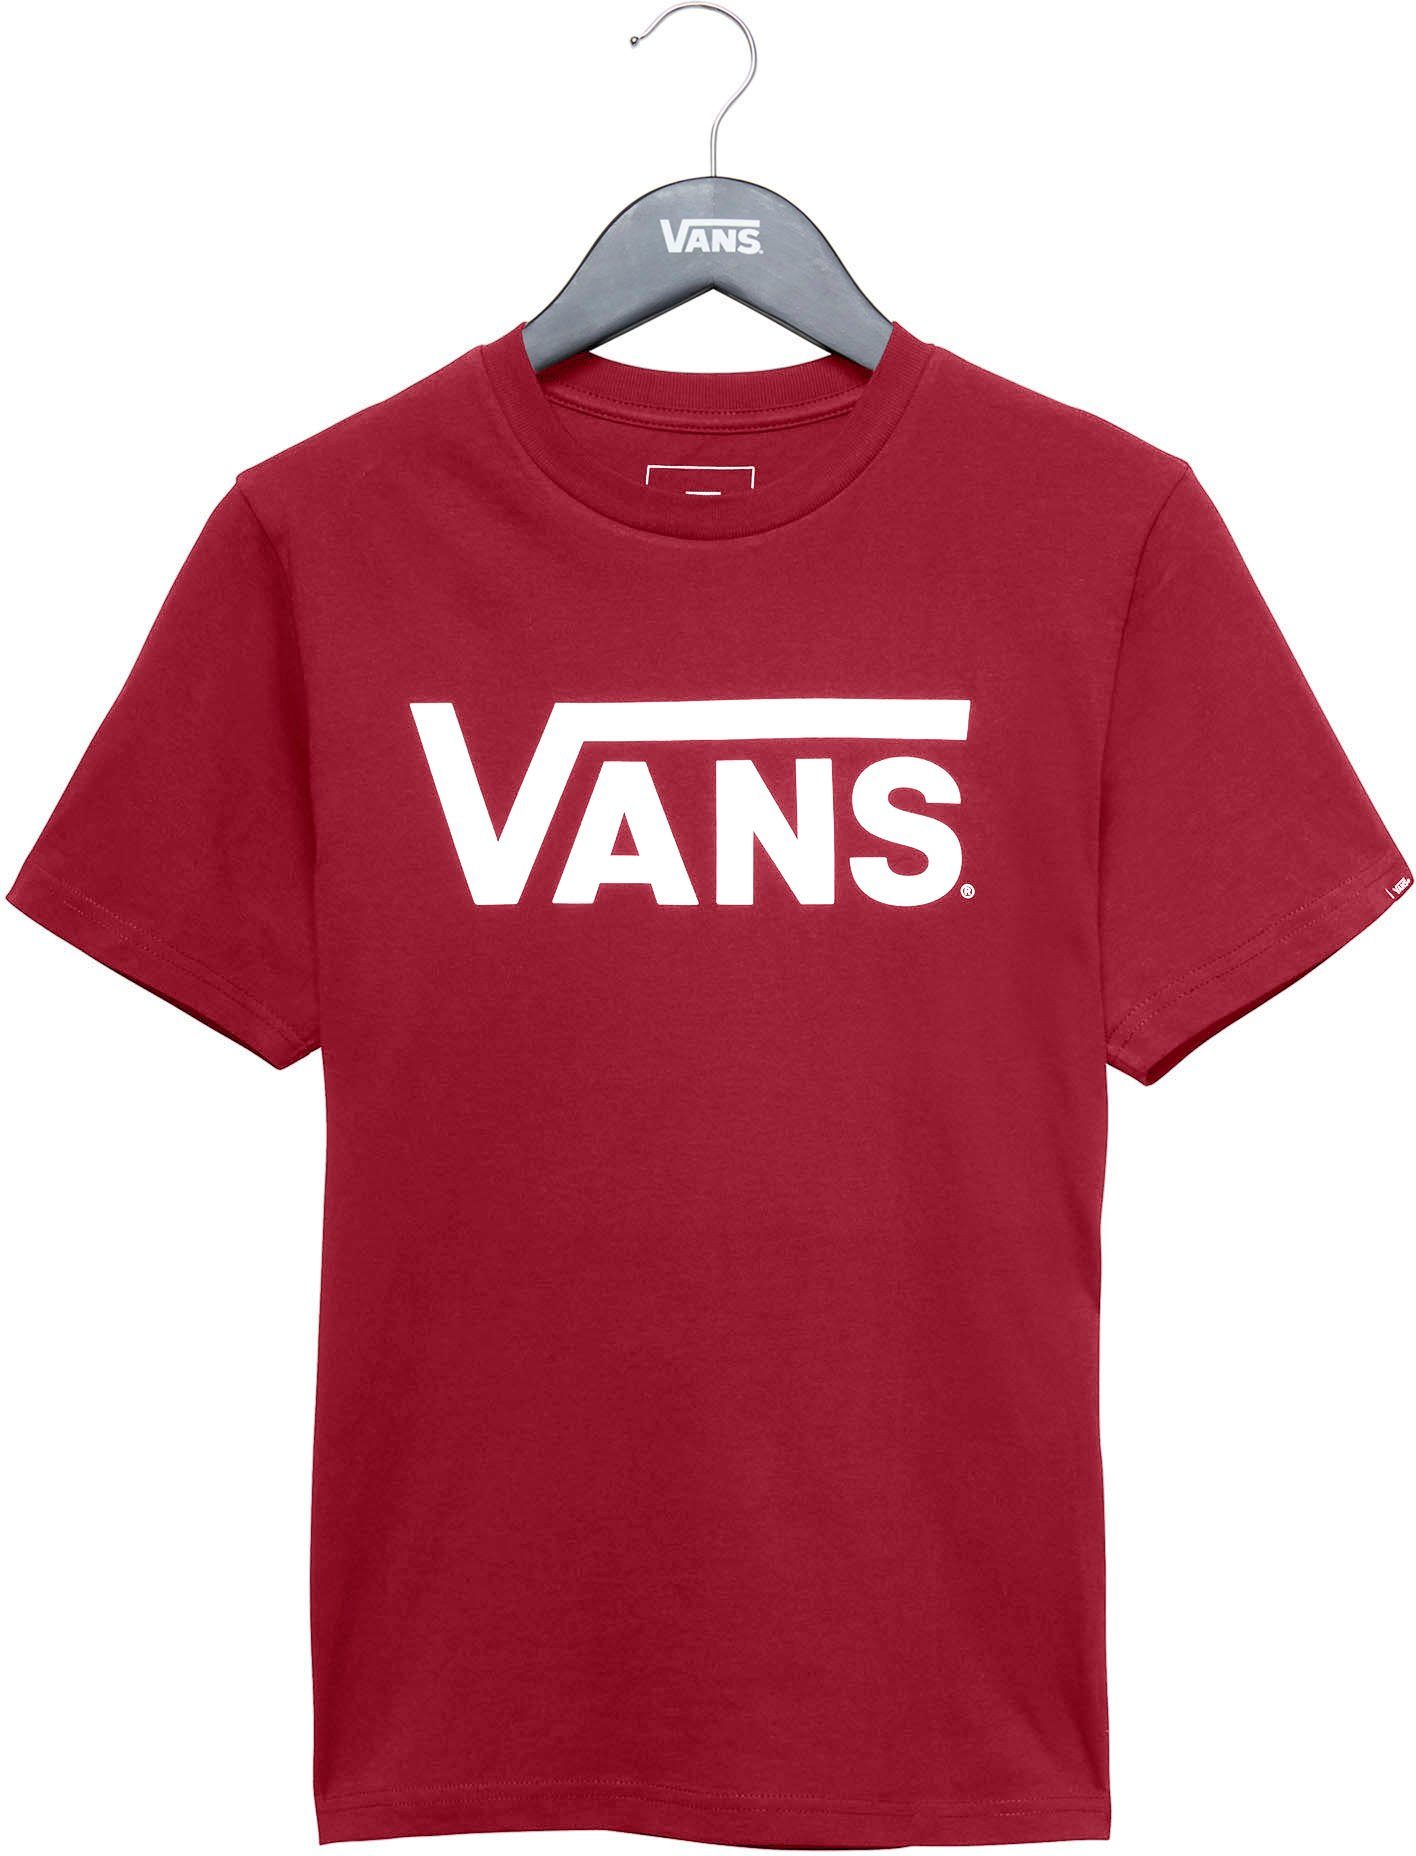 CLASSIC VANS Vans chili T-Shirt BOYS pepper